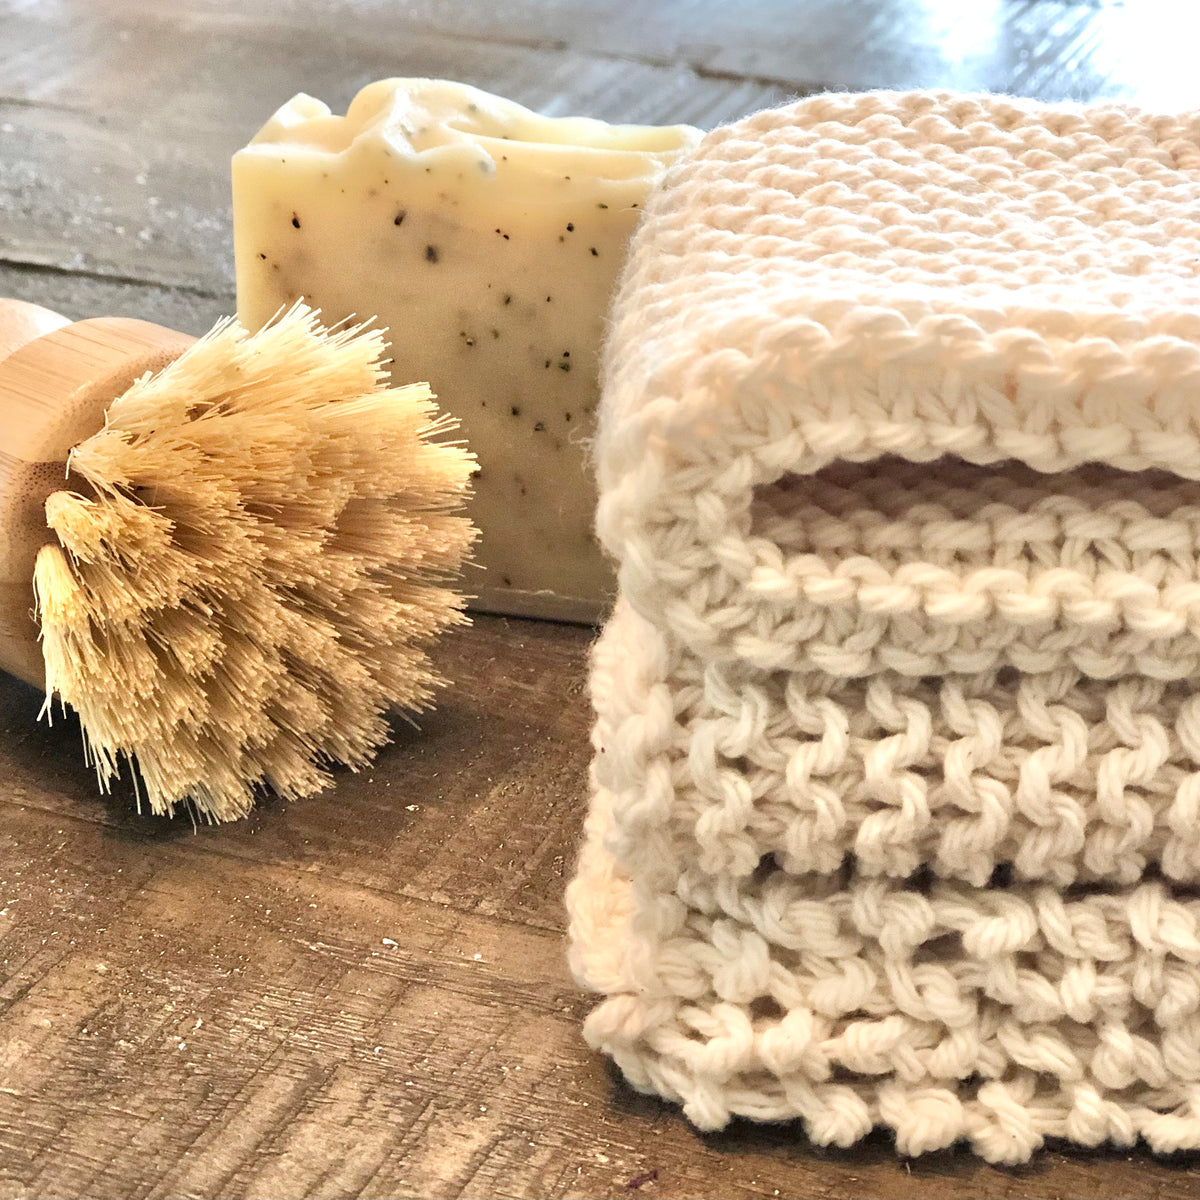 XL Soap Saver Hand Knit Wash Cloth